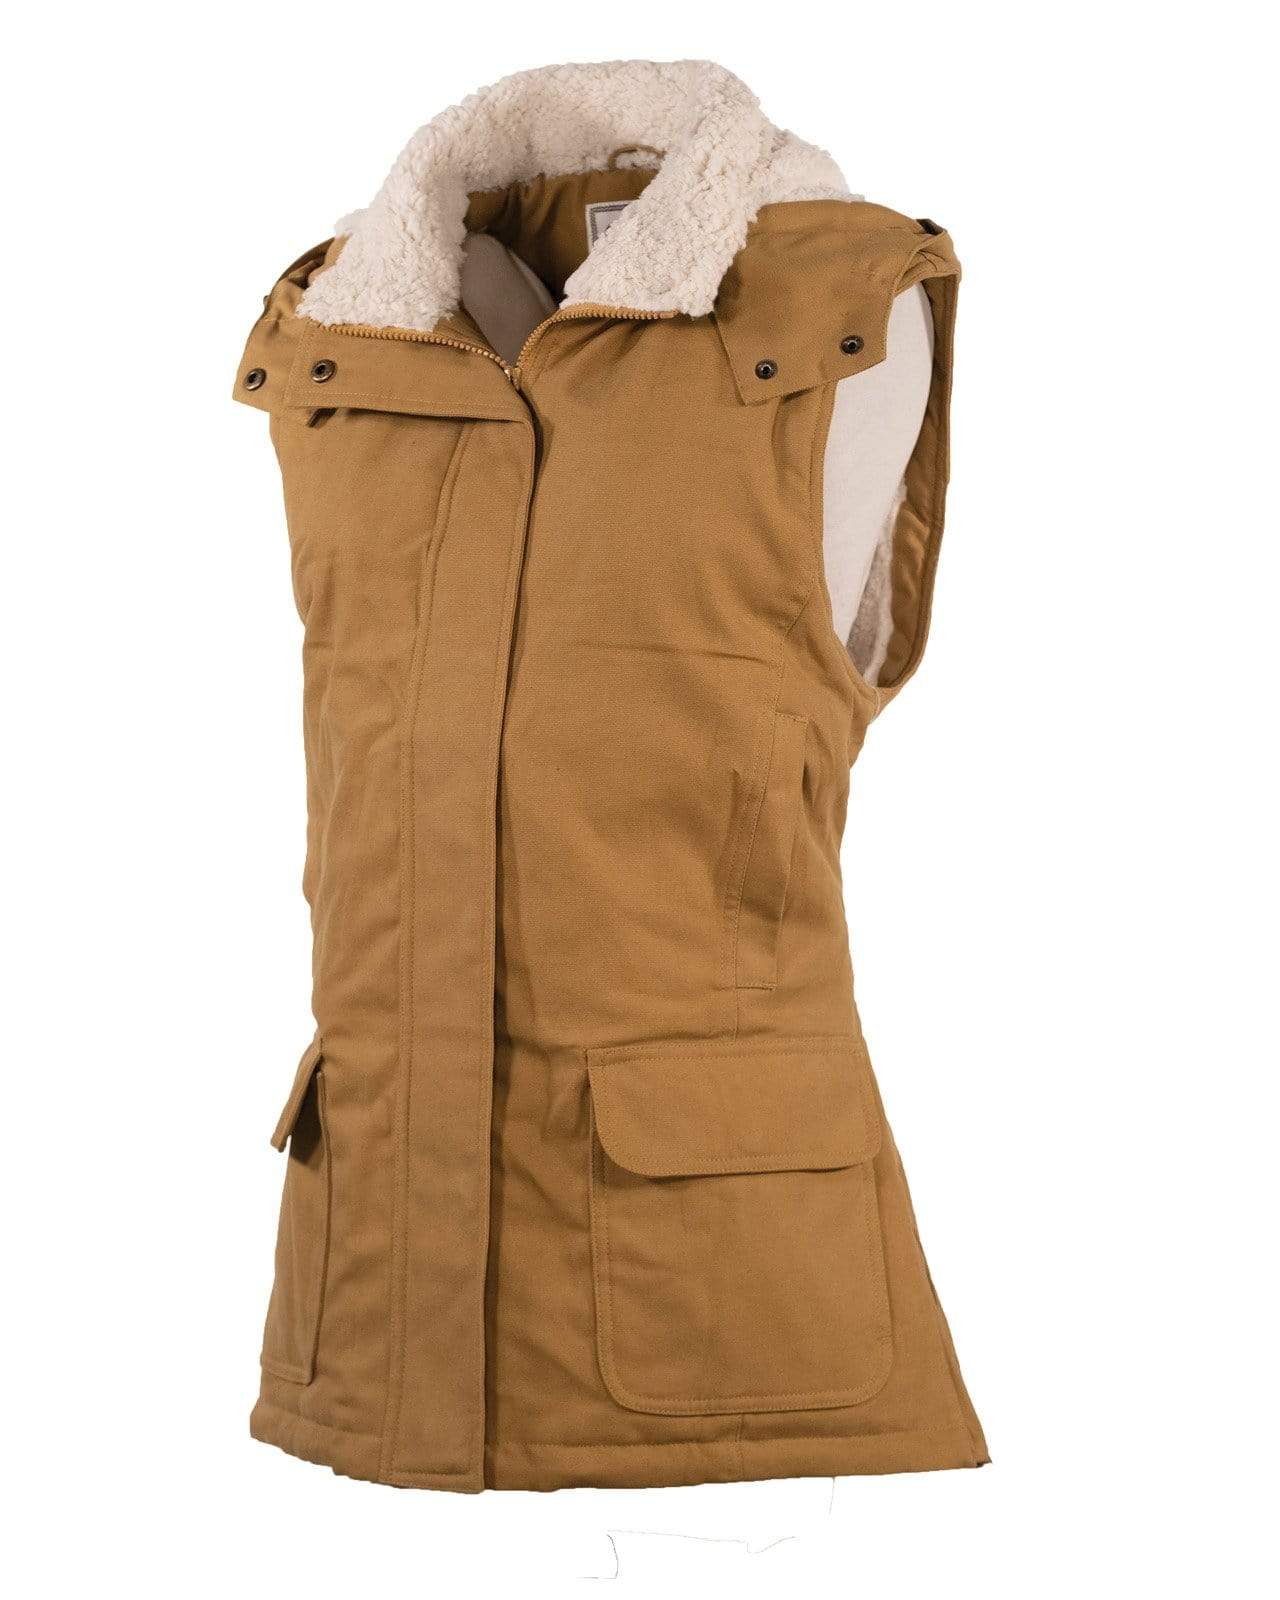 Outback Trading Company Women’s Juniper Vest Vests